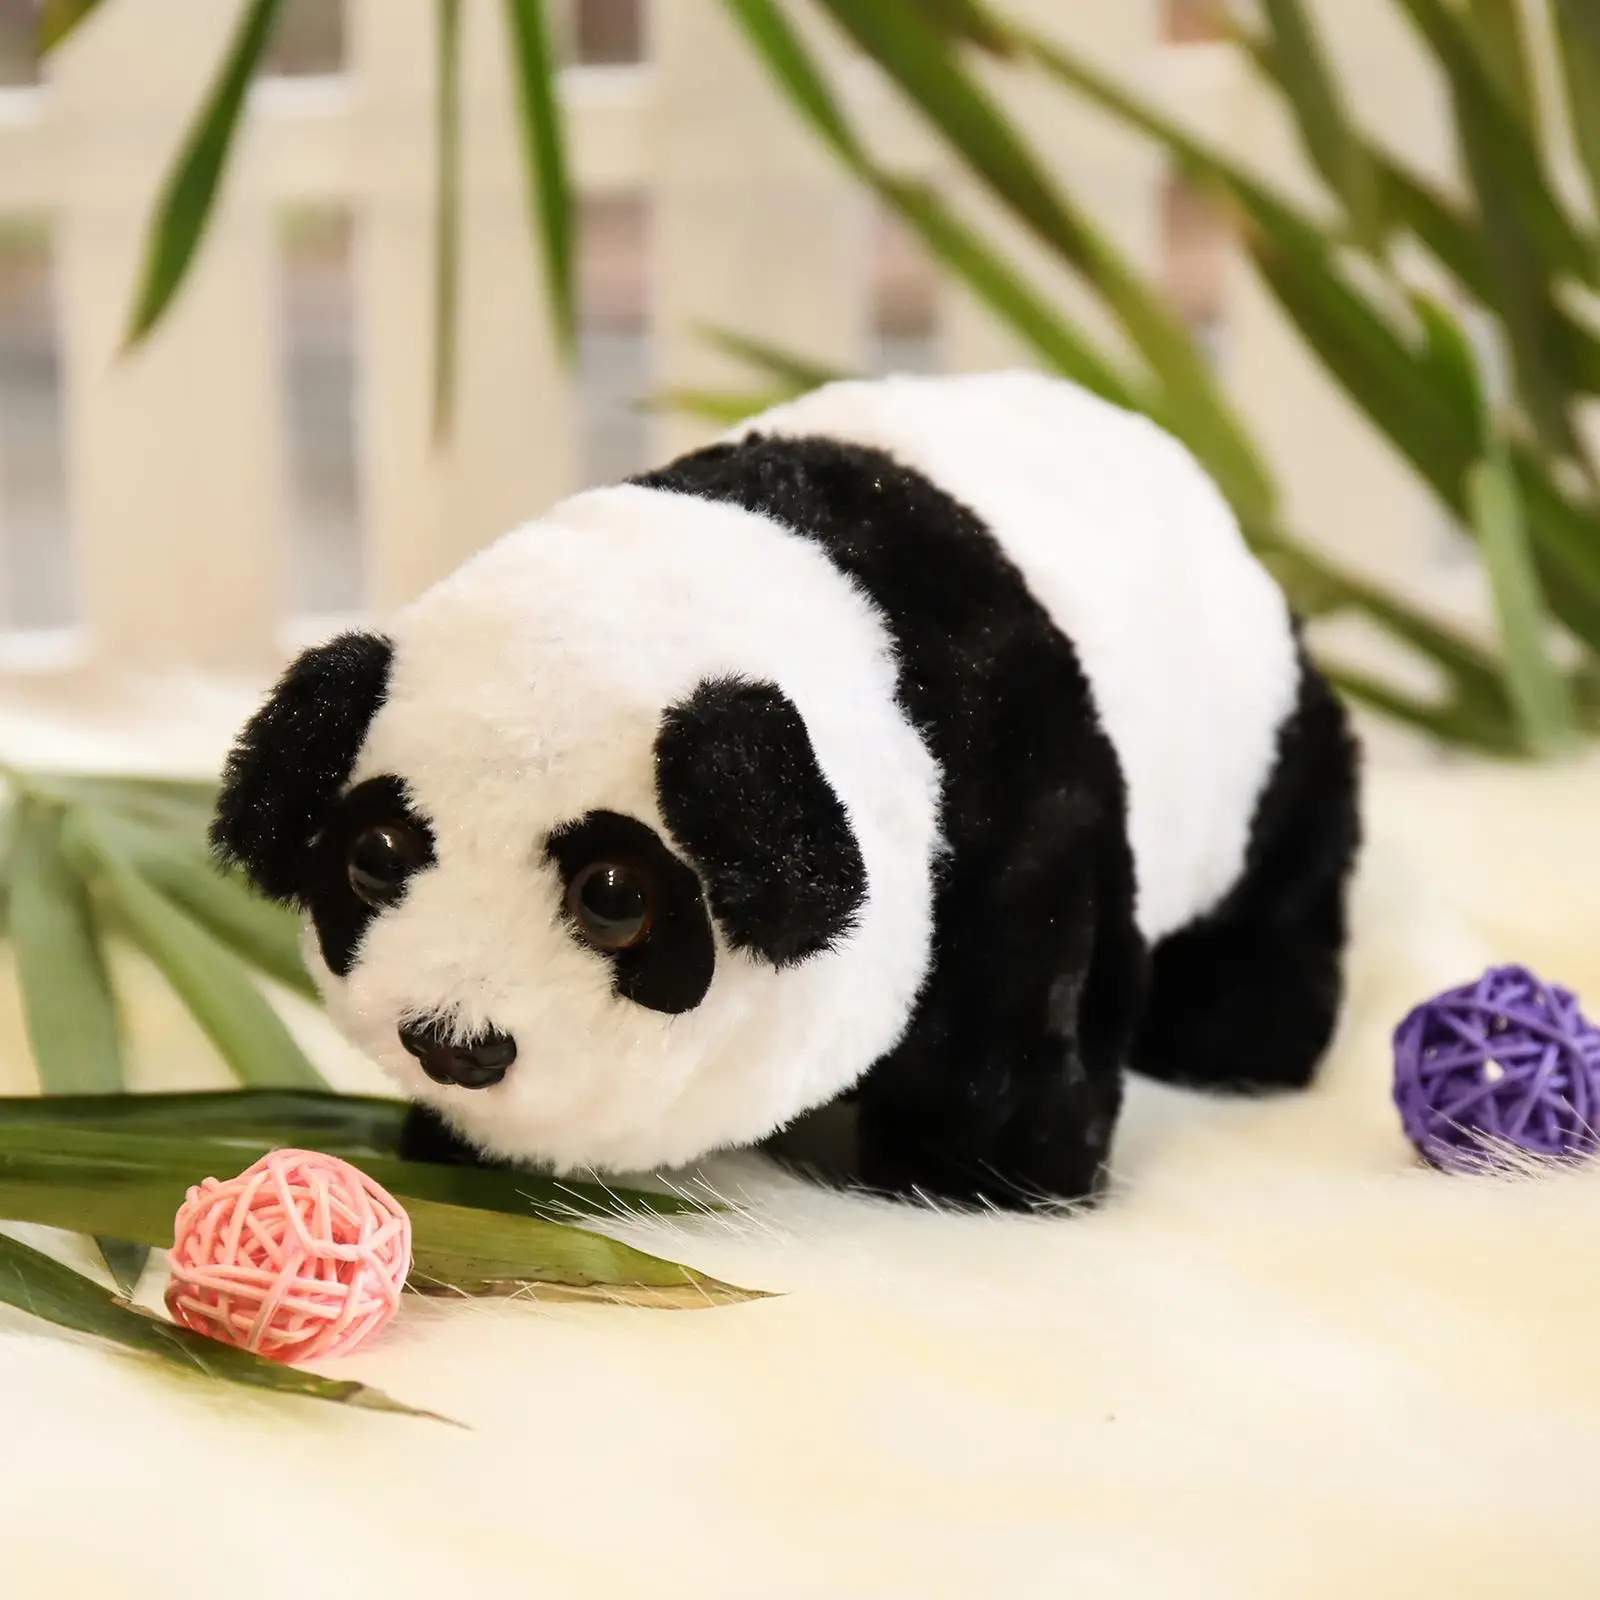 Electric Walking Panda Toy Plush Appease Toy Stuffed Animal Interactive Play